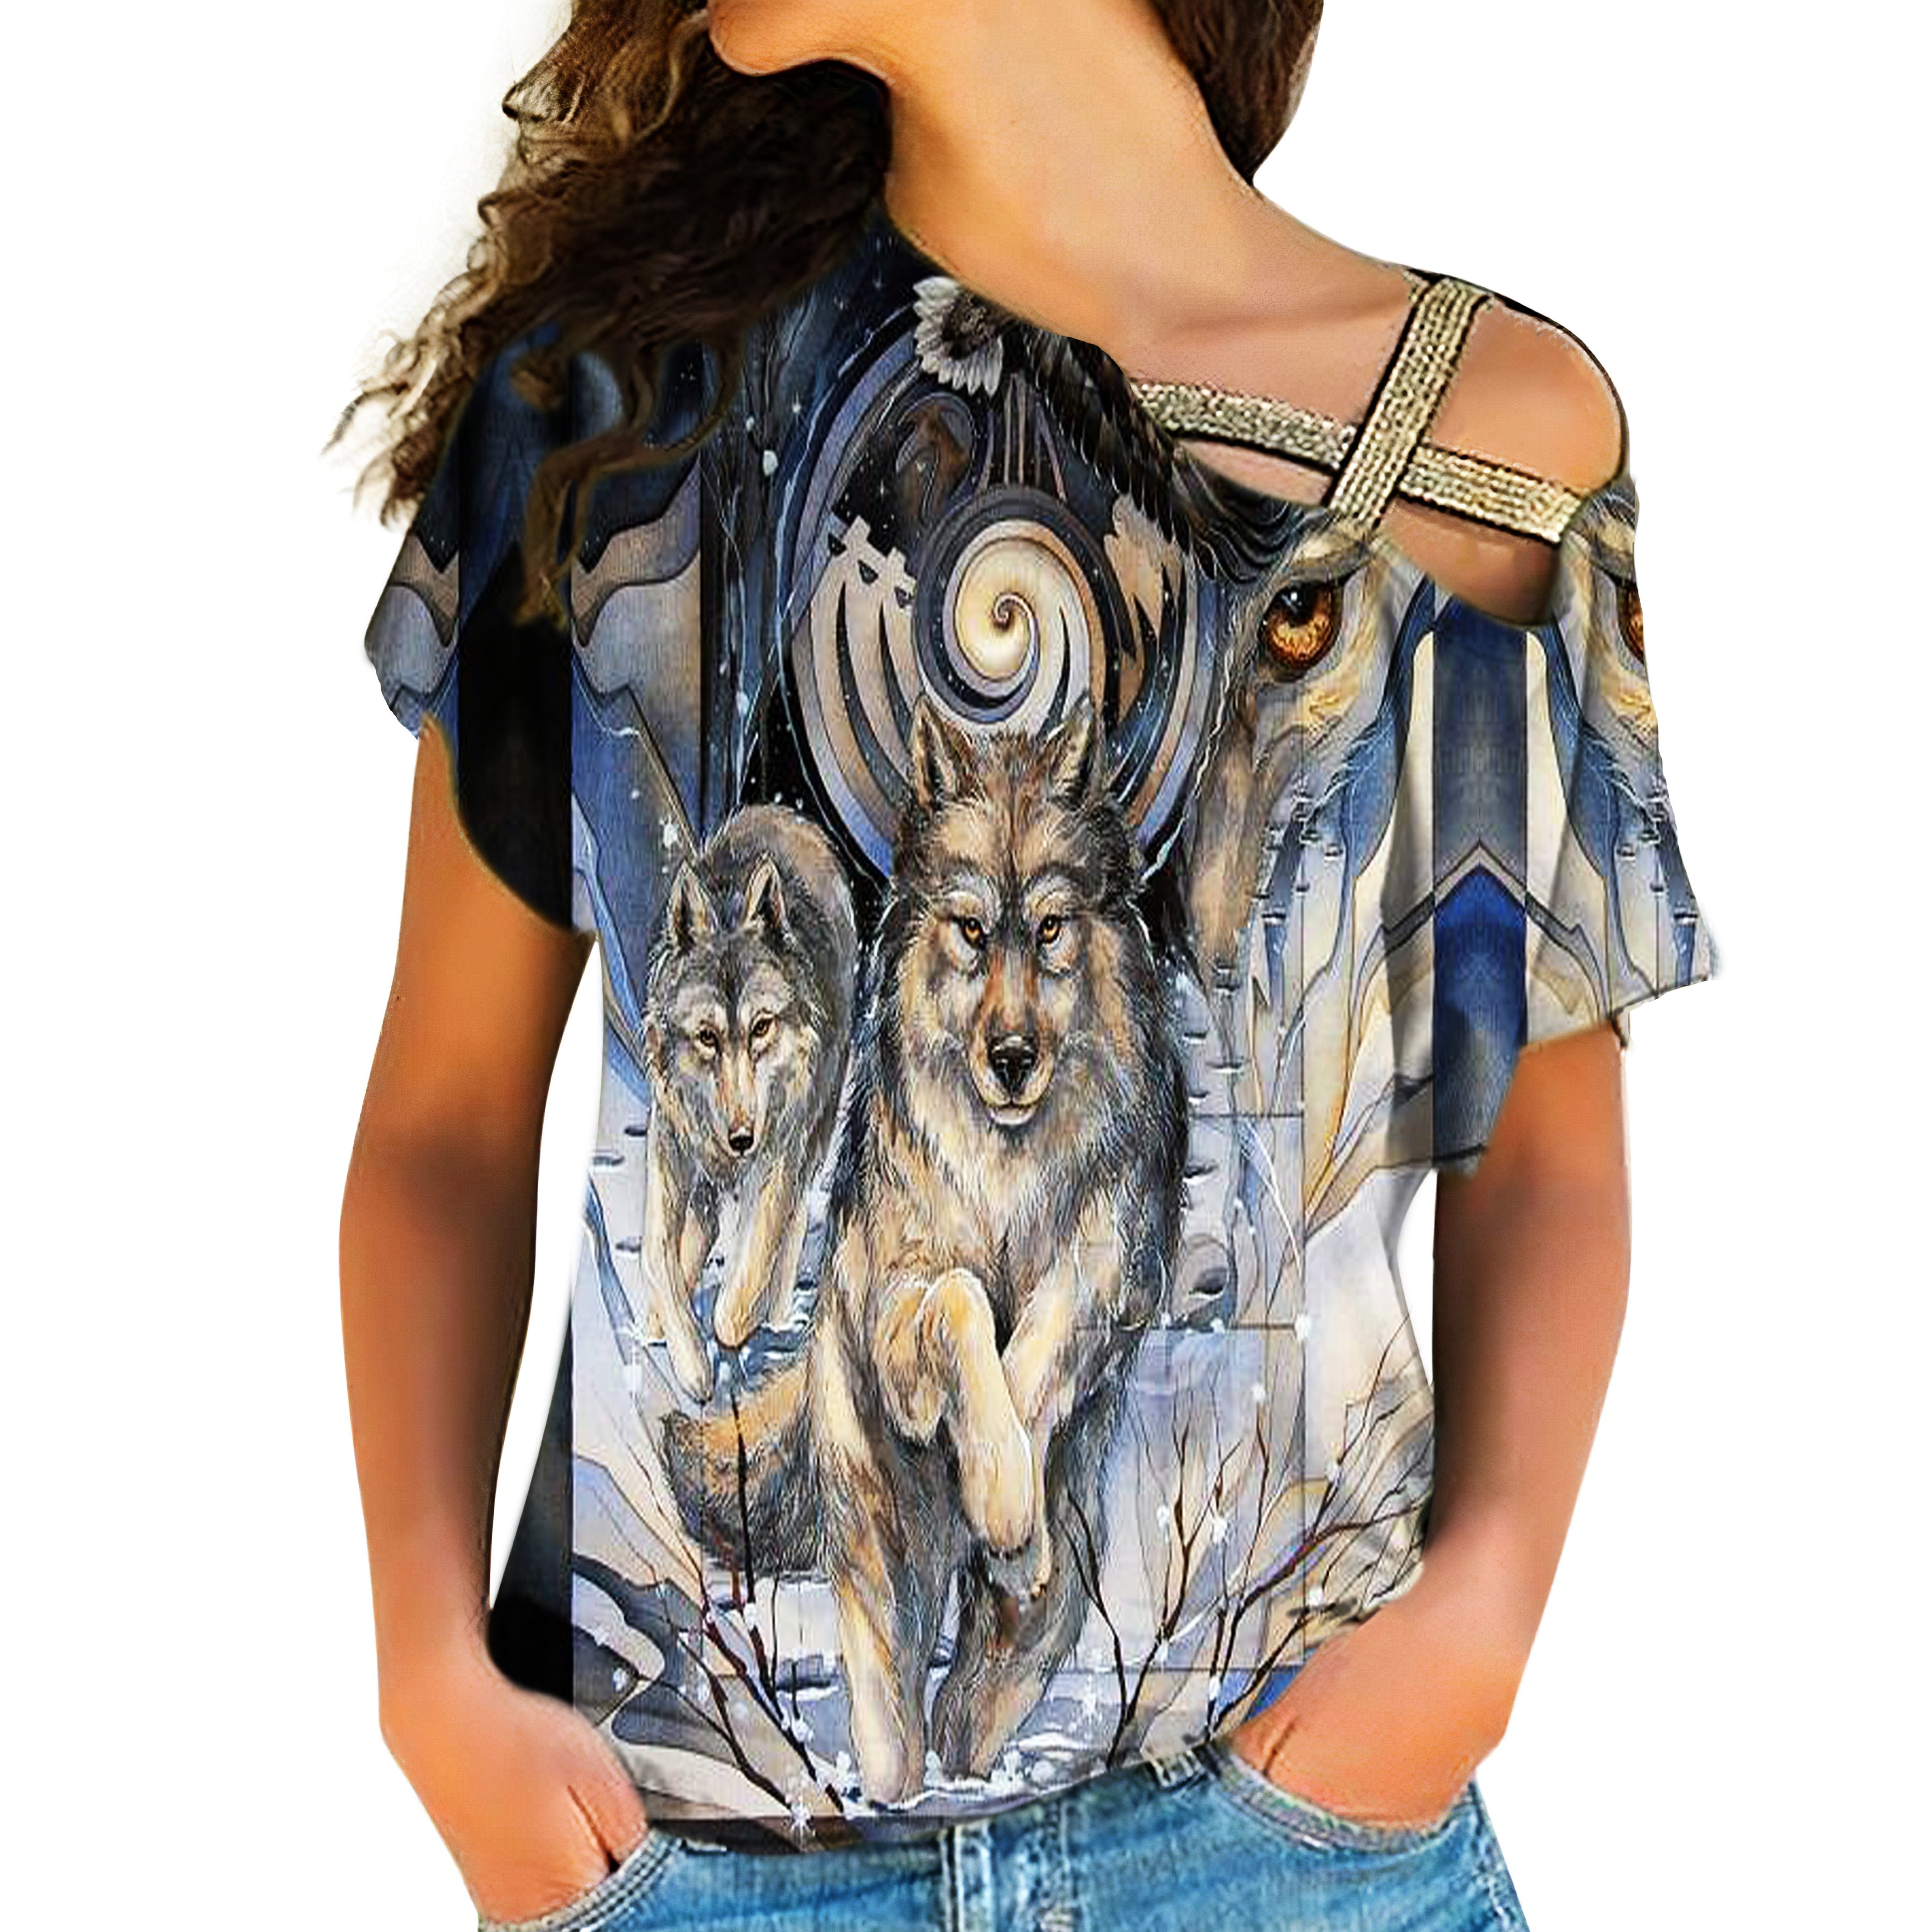 Powwow Store native american cross shoulder shirt 1189